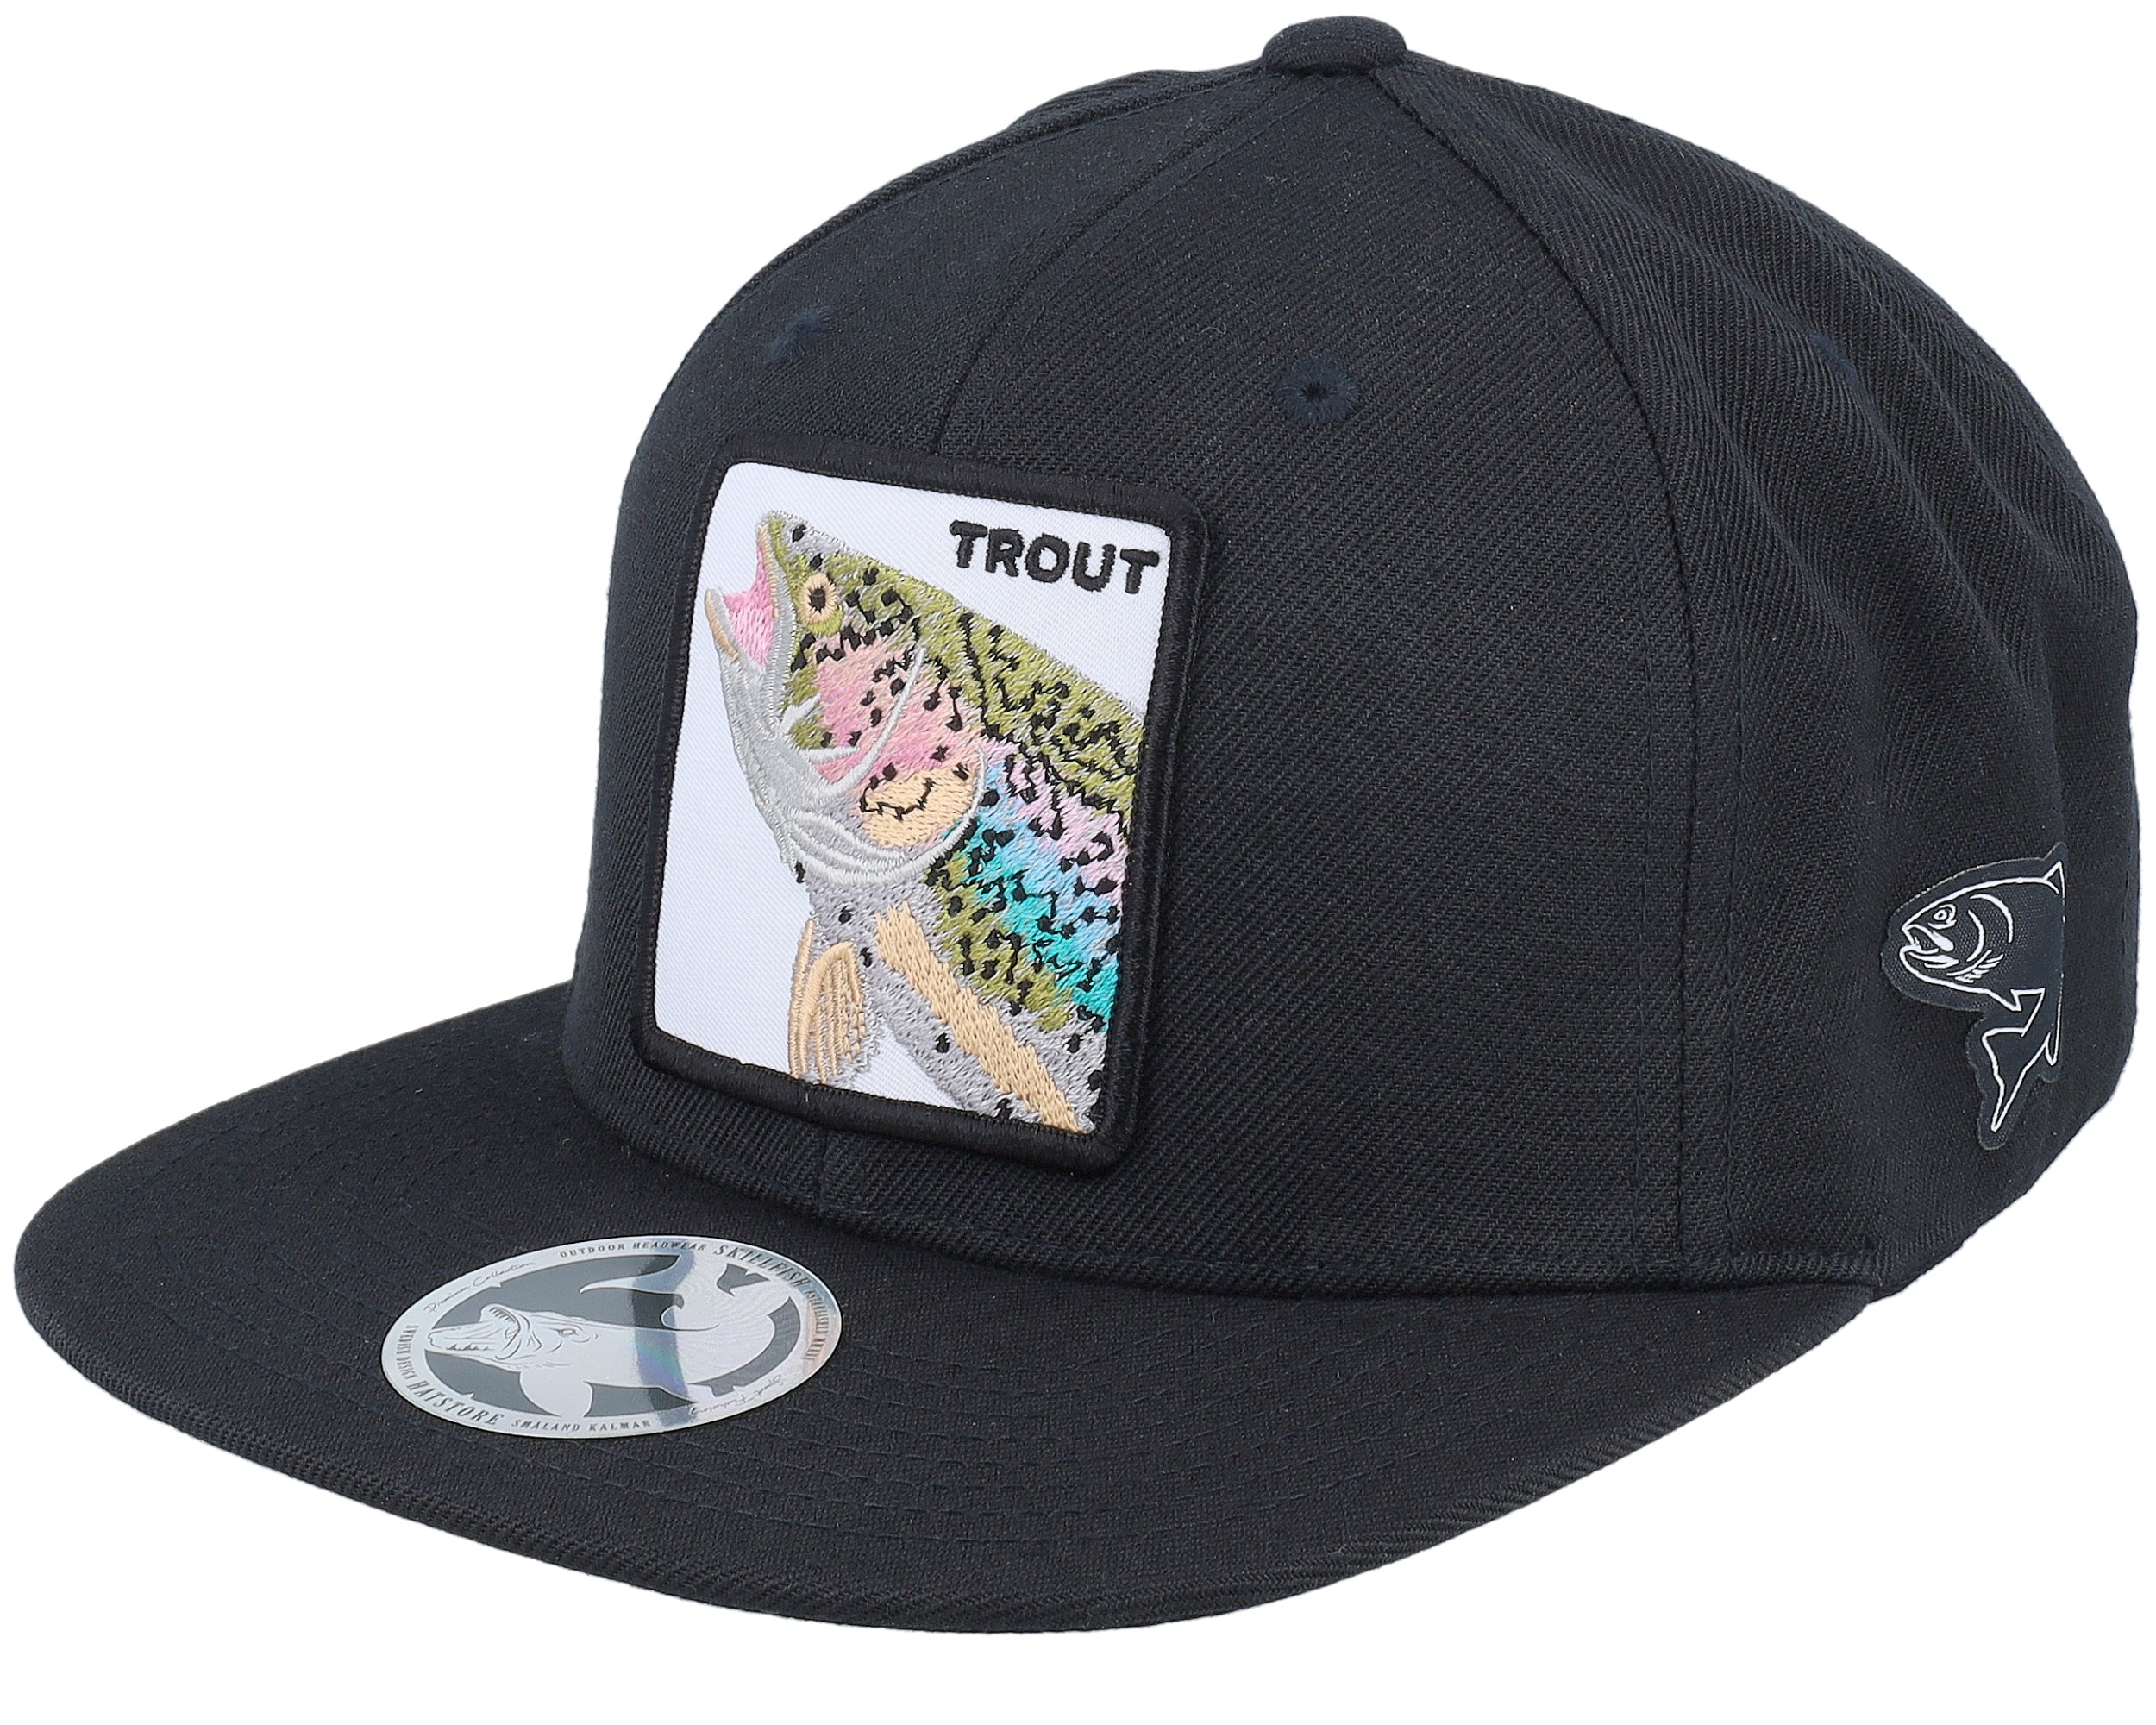 Trout Pro Fishing Black Snapback - Skillfish cap